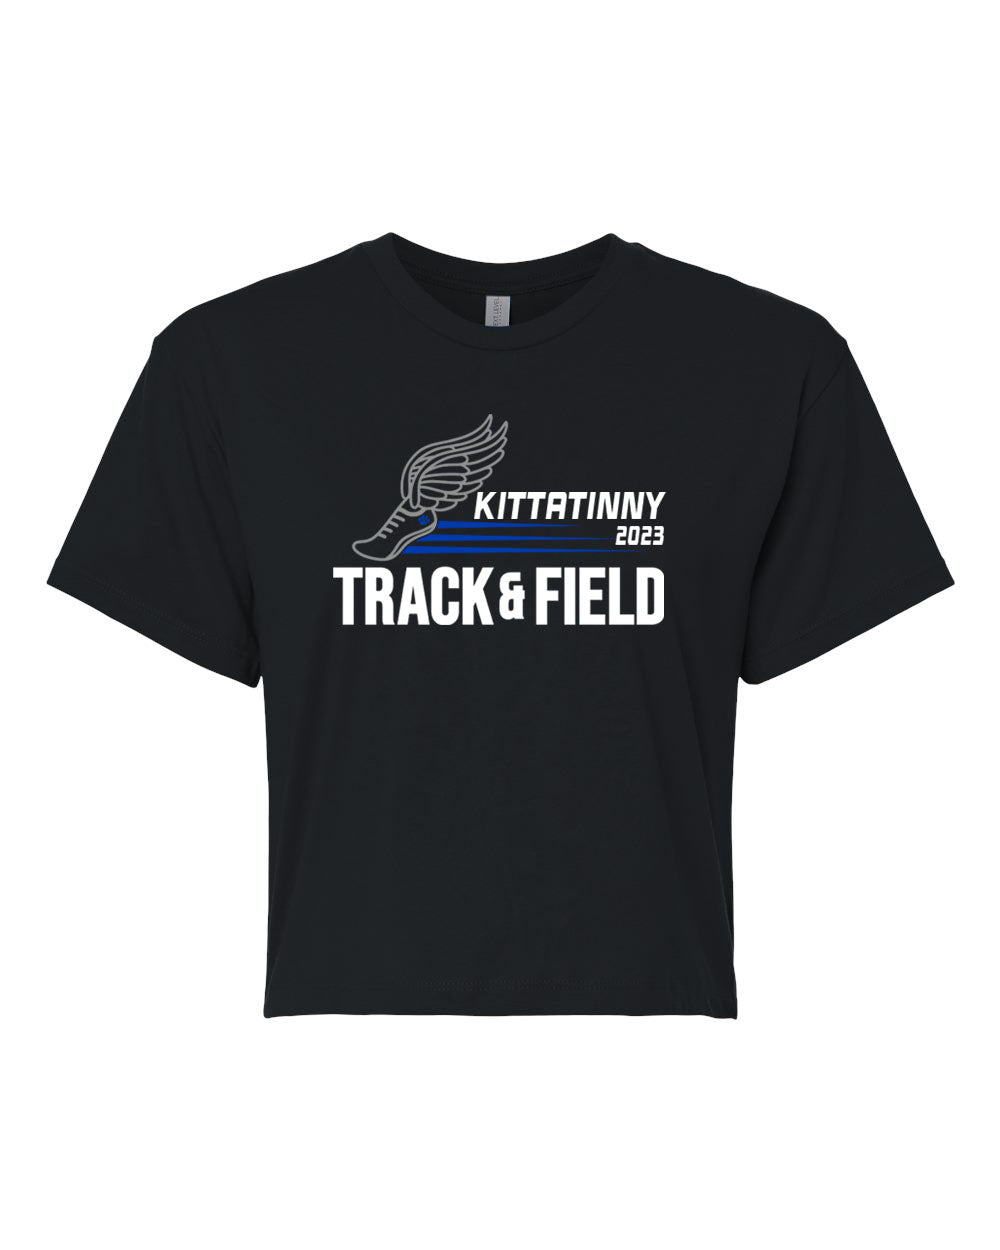 Kittatinny Track design 2 Crop Top